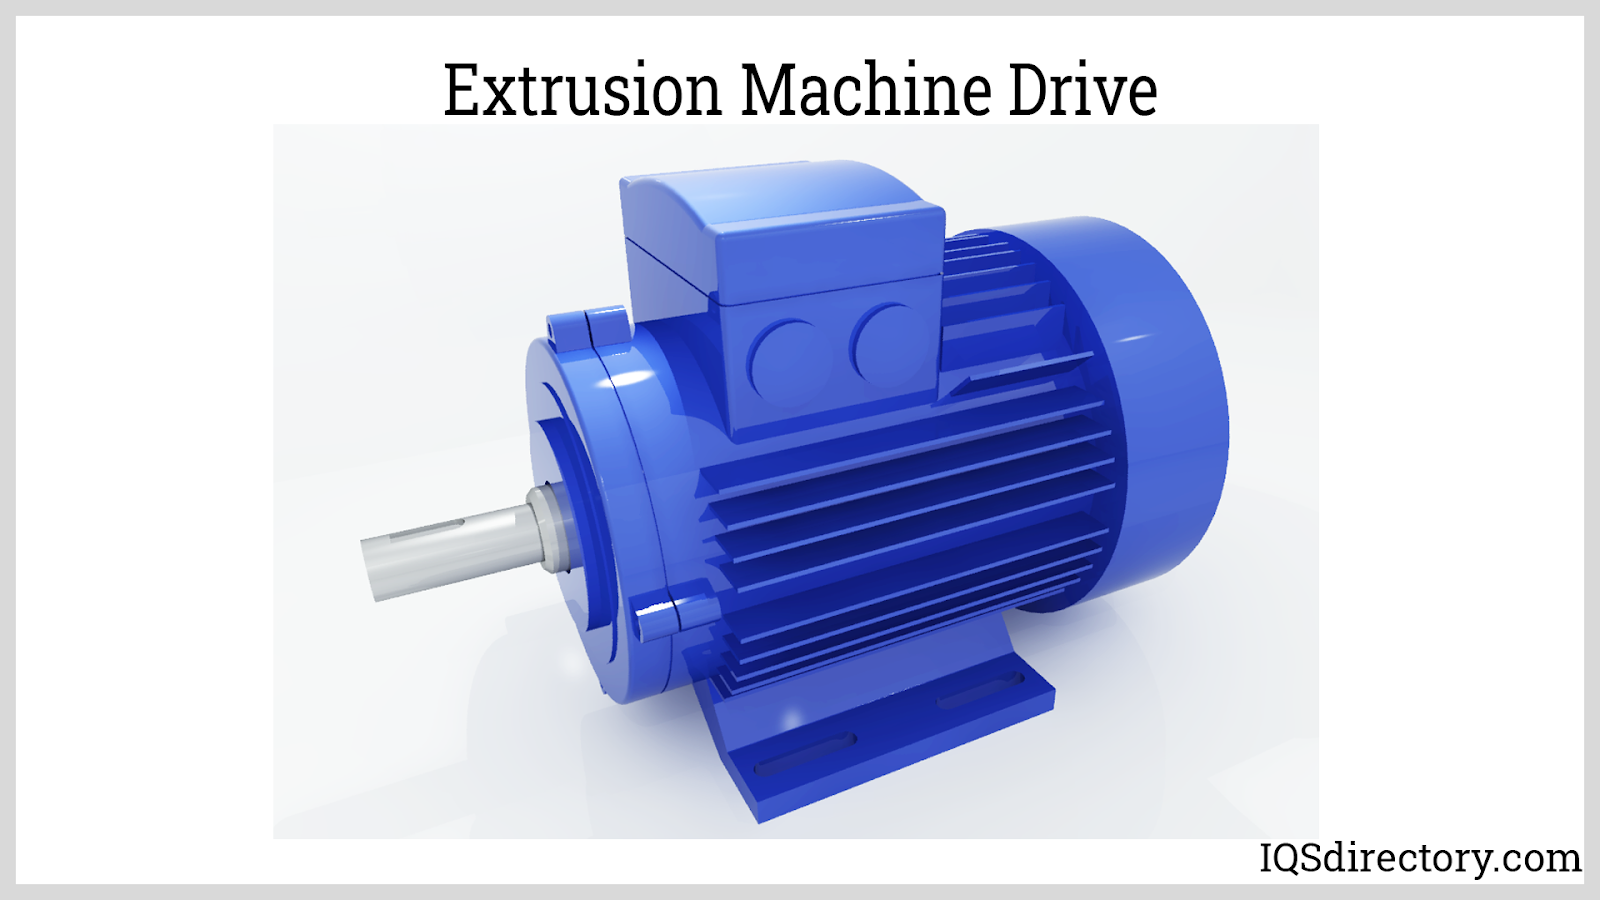 Extrusion Machine Drive